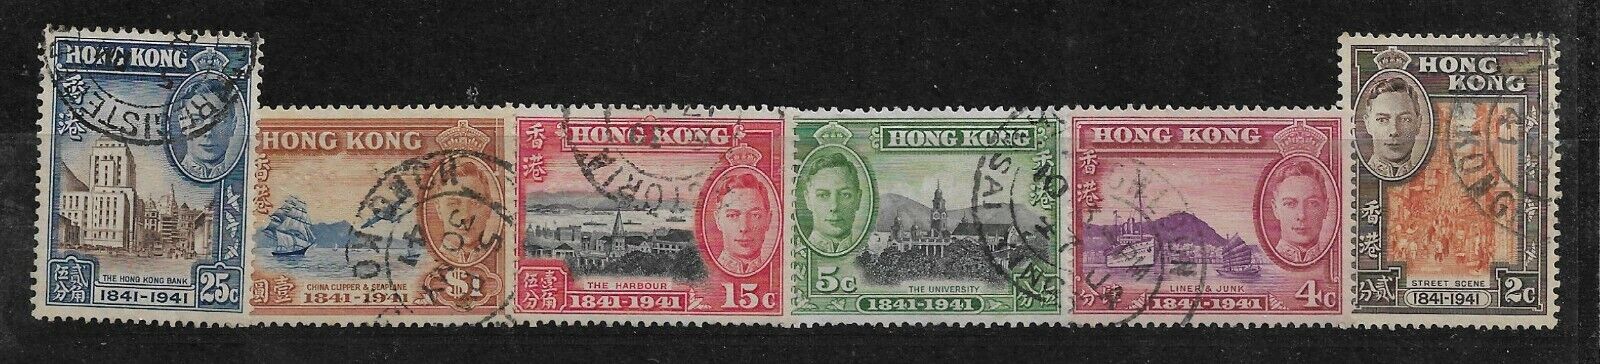 Hongkong Mi 6 Stamps Used 1.sets